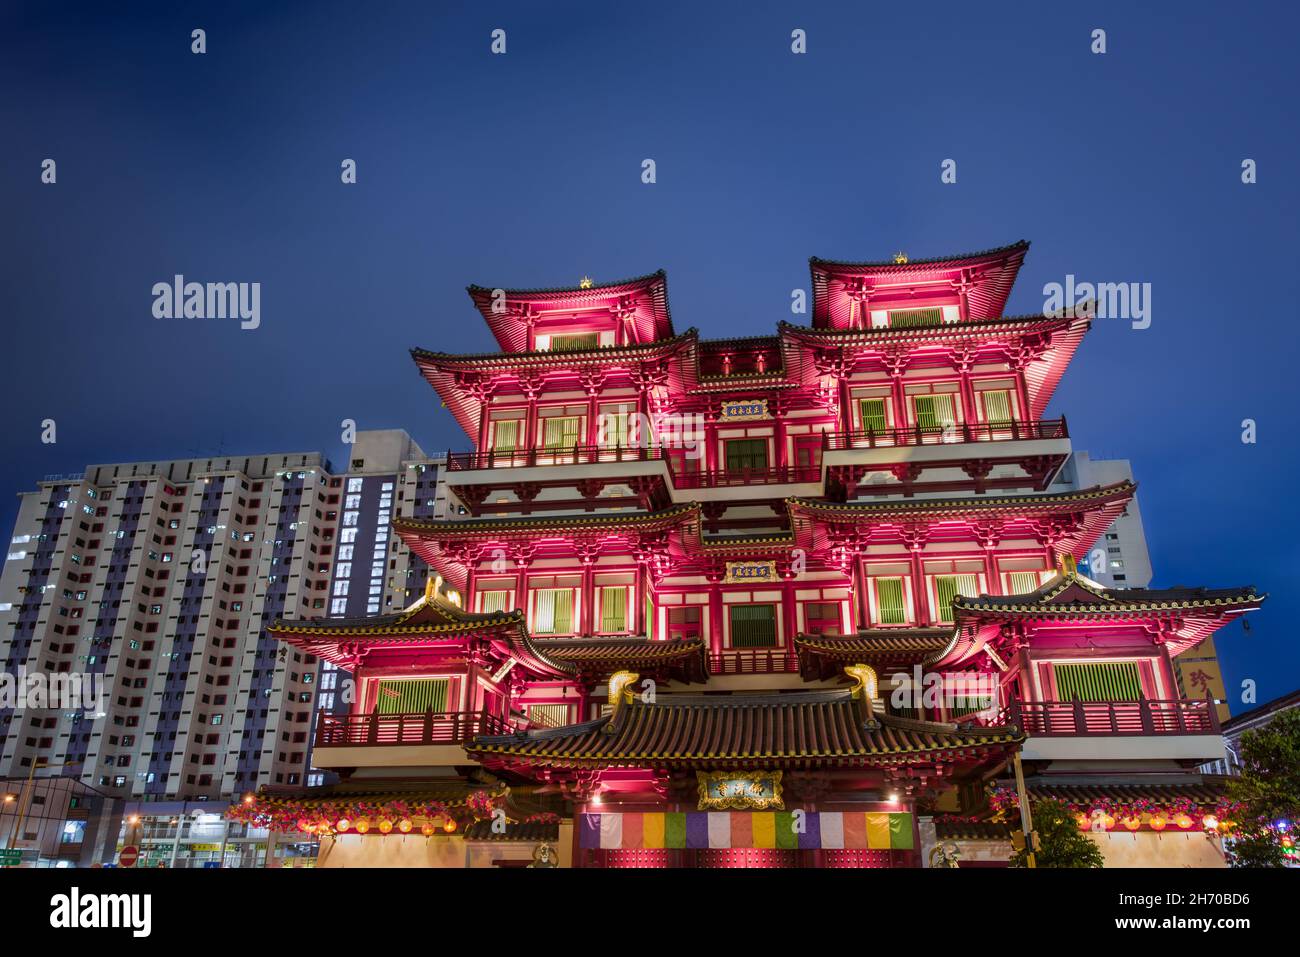 Singapore, 06 February 2016: Light up of Buddhist temple in Chinatown, Singapore. Stock Photo